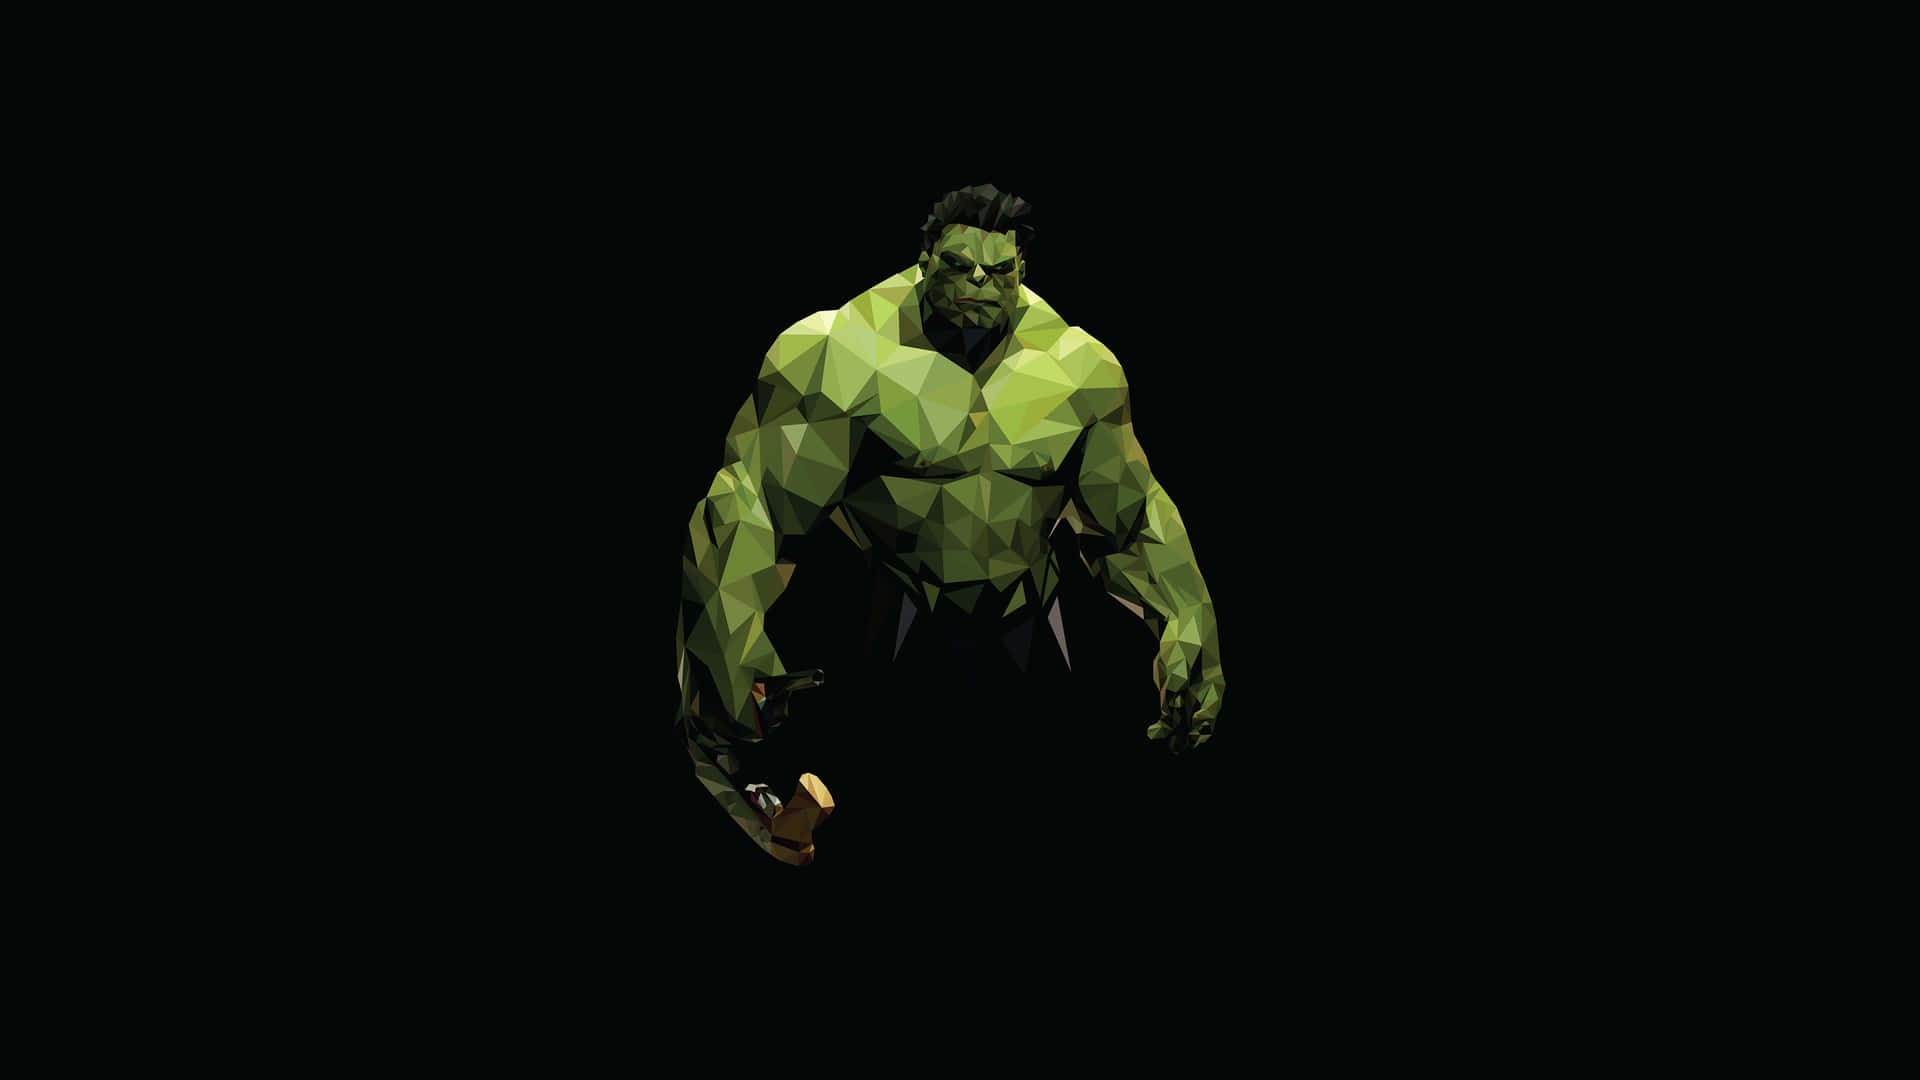 "The Incredibe Hulk ready to save the world!"